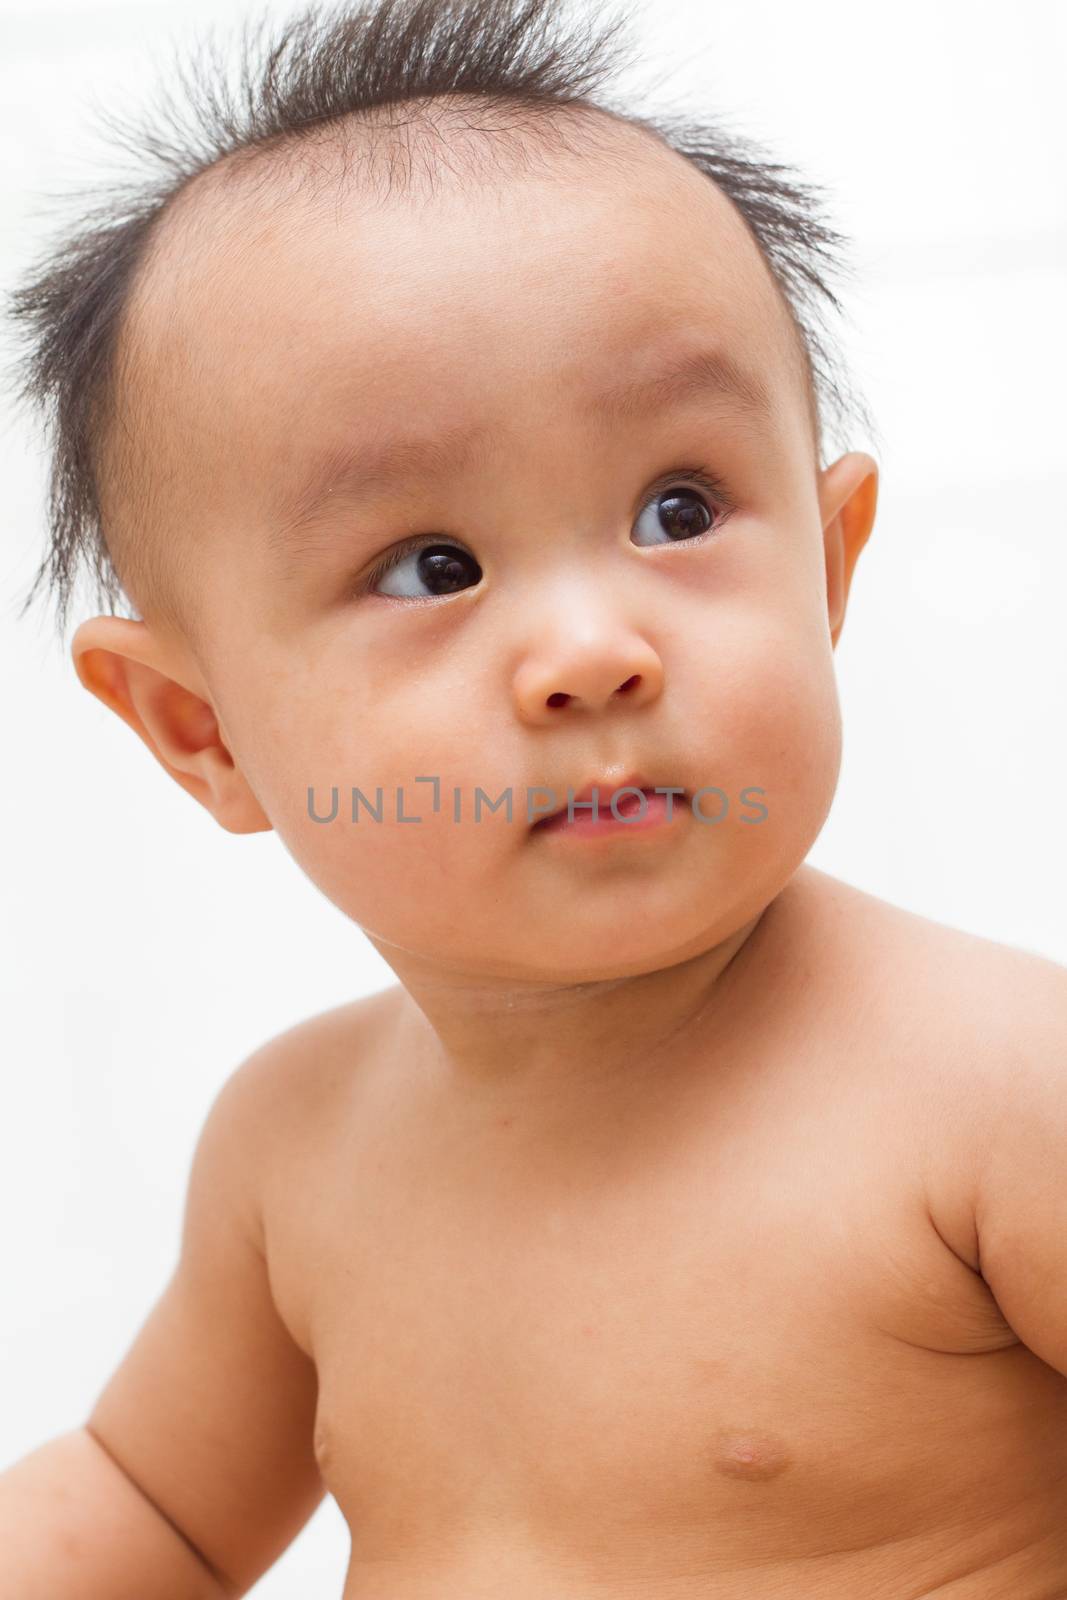 Asian Chinese Baby Portrait Close Up Studio Shot